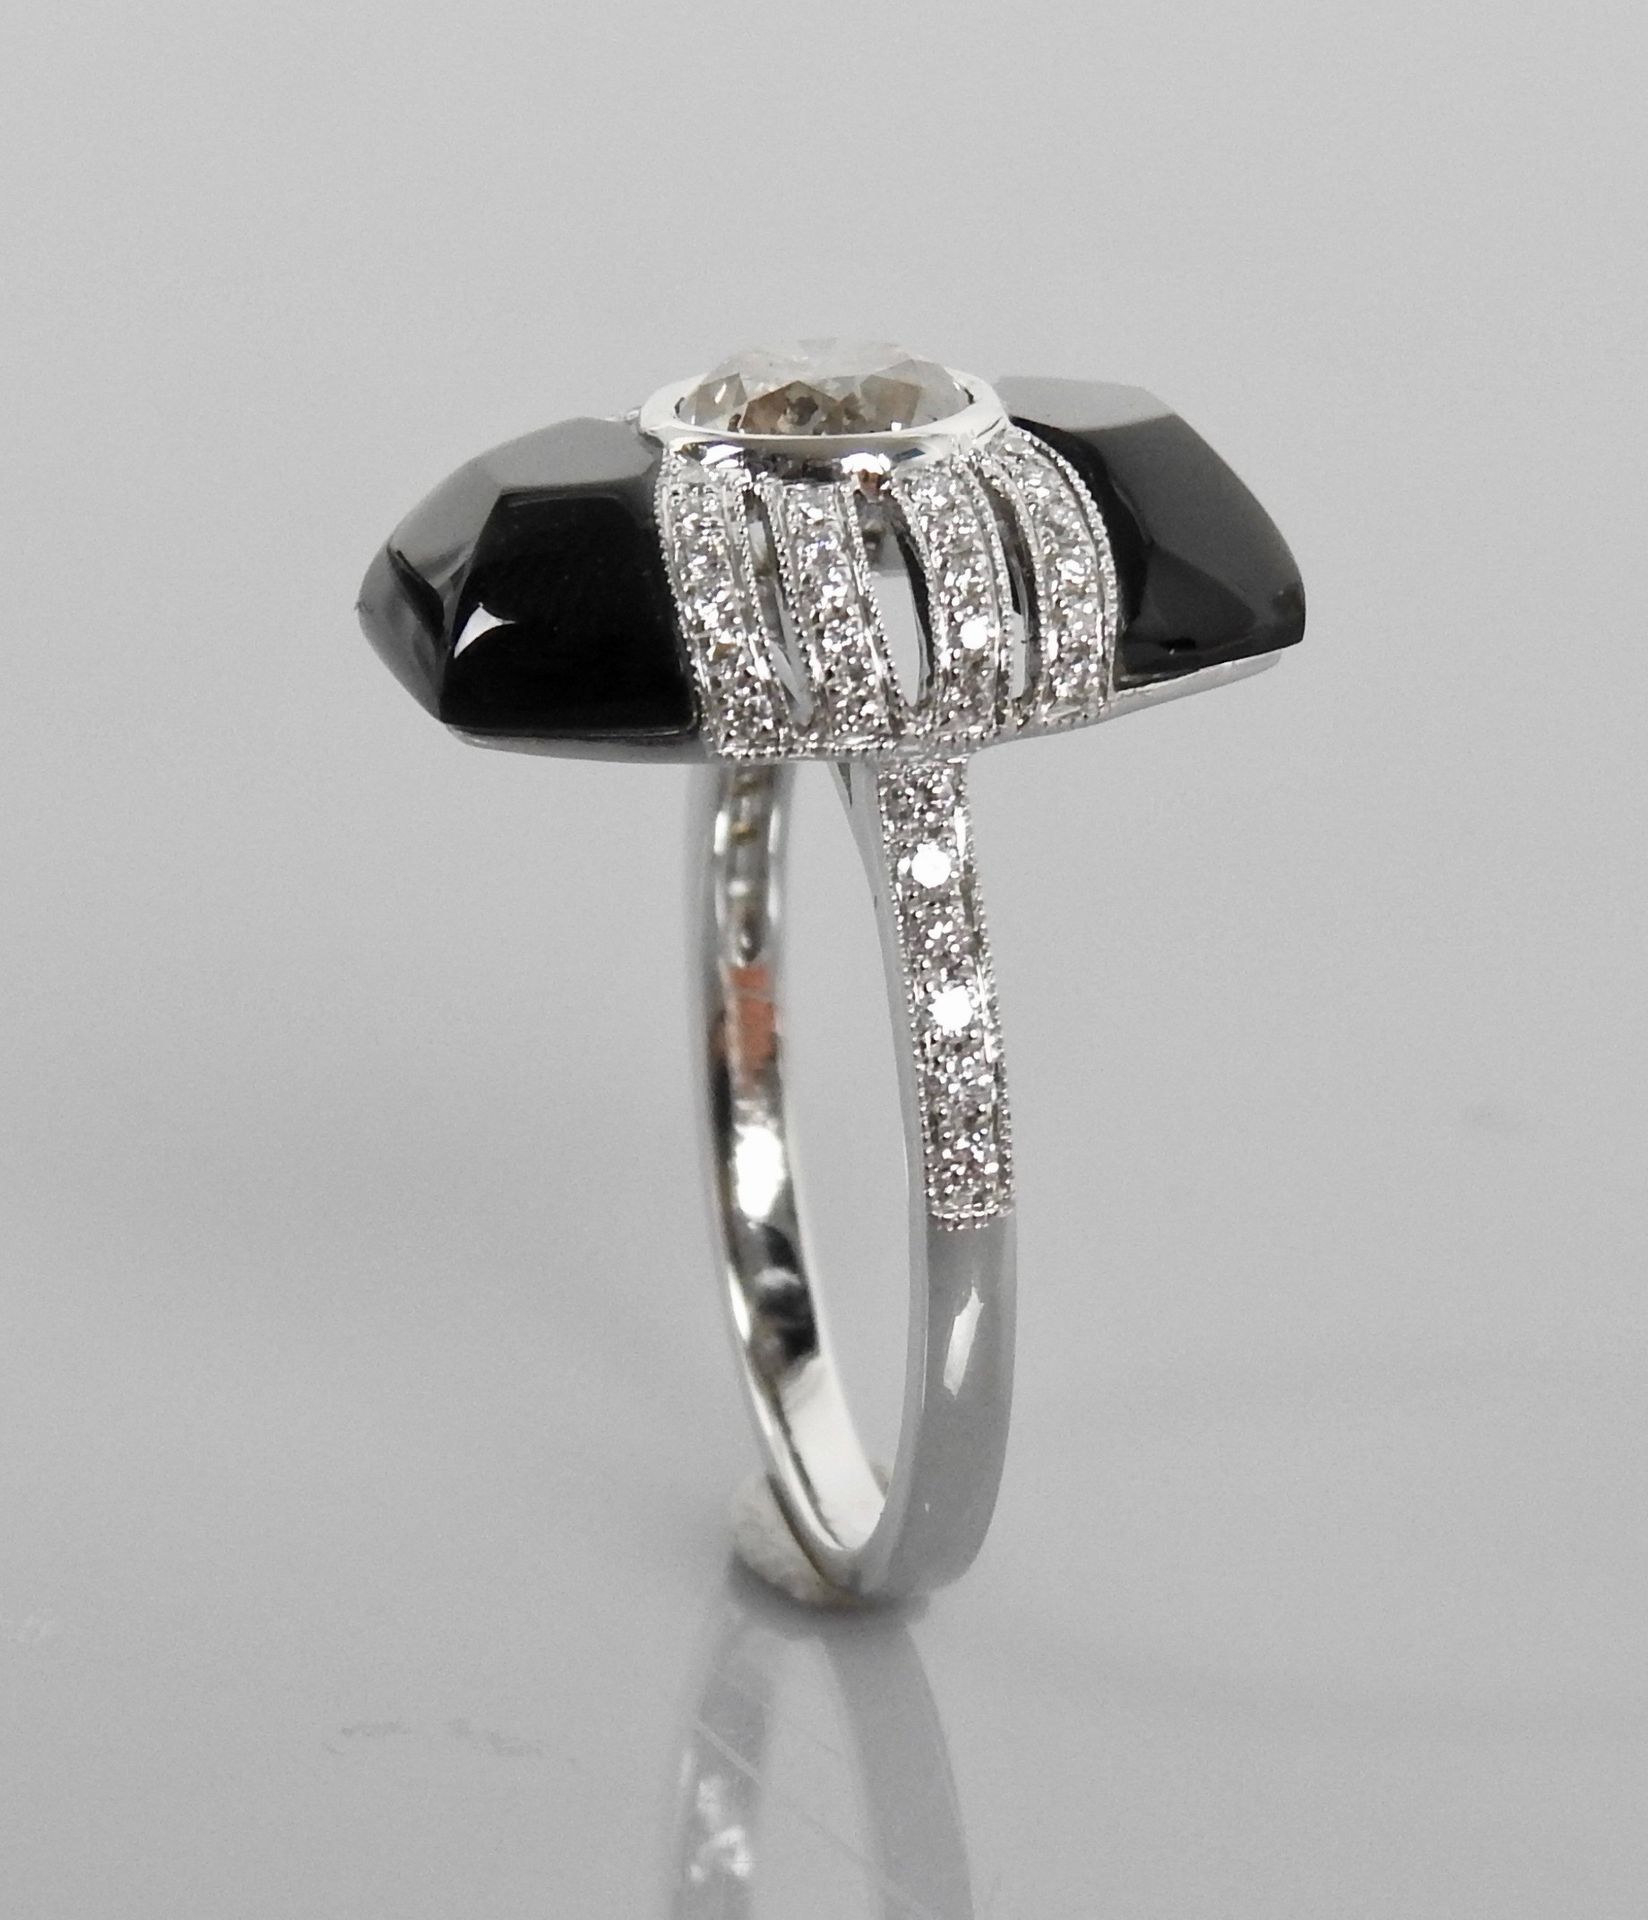 Null 白金戒指，750毫米，镶有桶形切割黑玛瑙，并镶嵌有一颗重达1克拉的钻石，有两个钻石覆盖的图案，16 x 14毫米，尺寸：55，重量：4.7克，毛重。